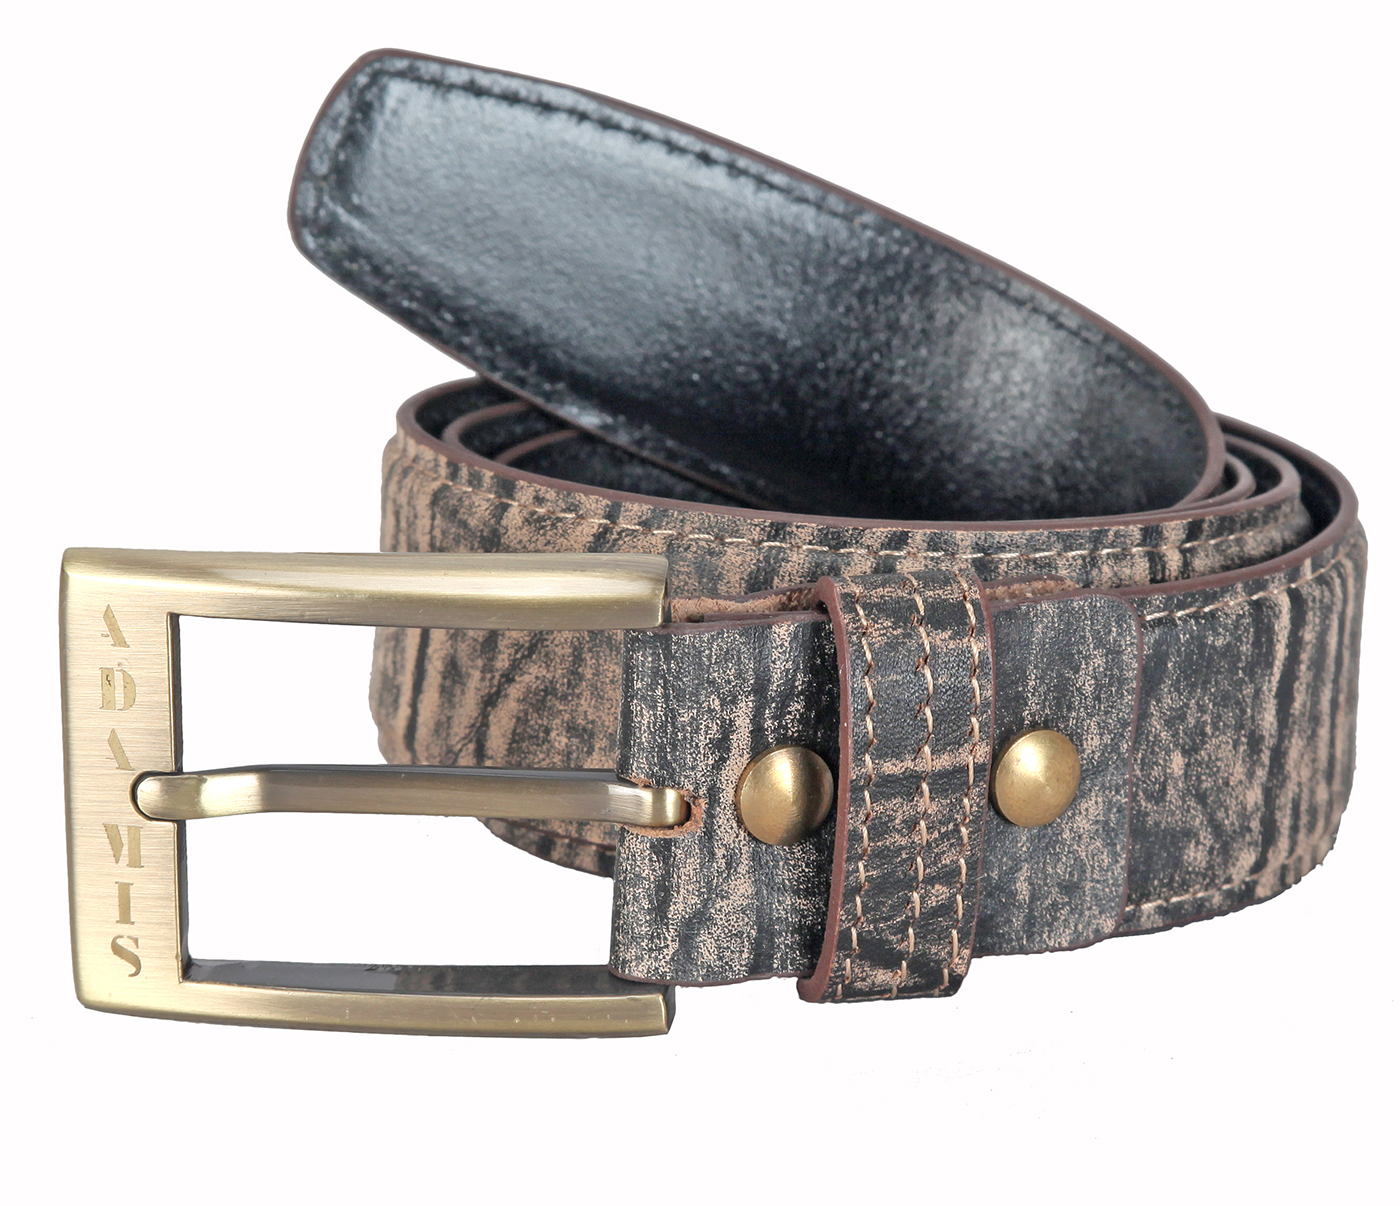 BL167--Men's stylish Casual wear belt in Genuine Leather - Brown.